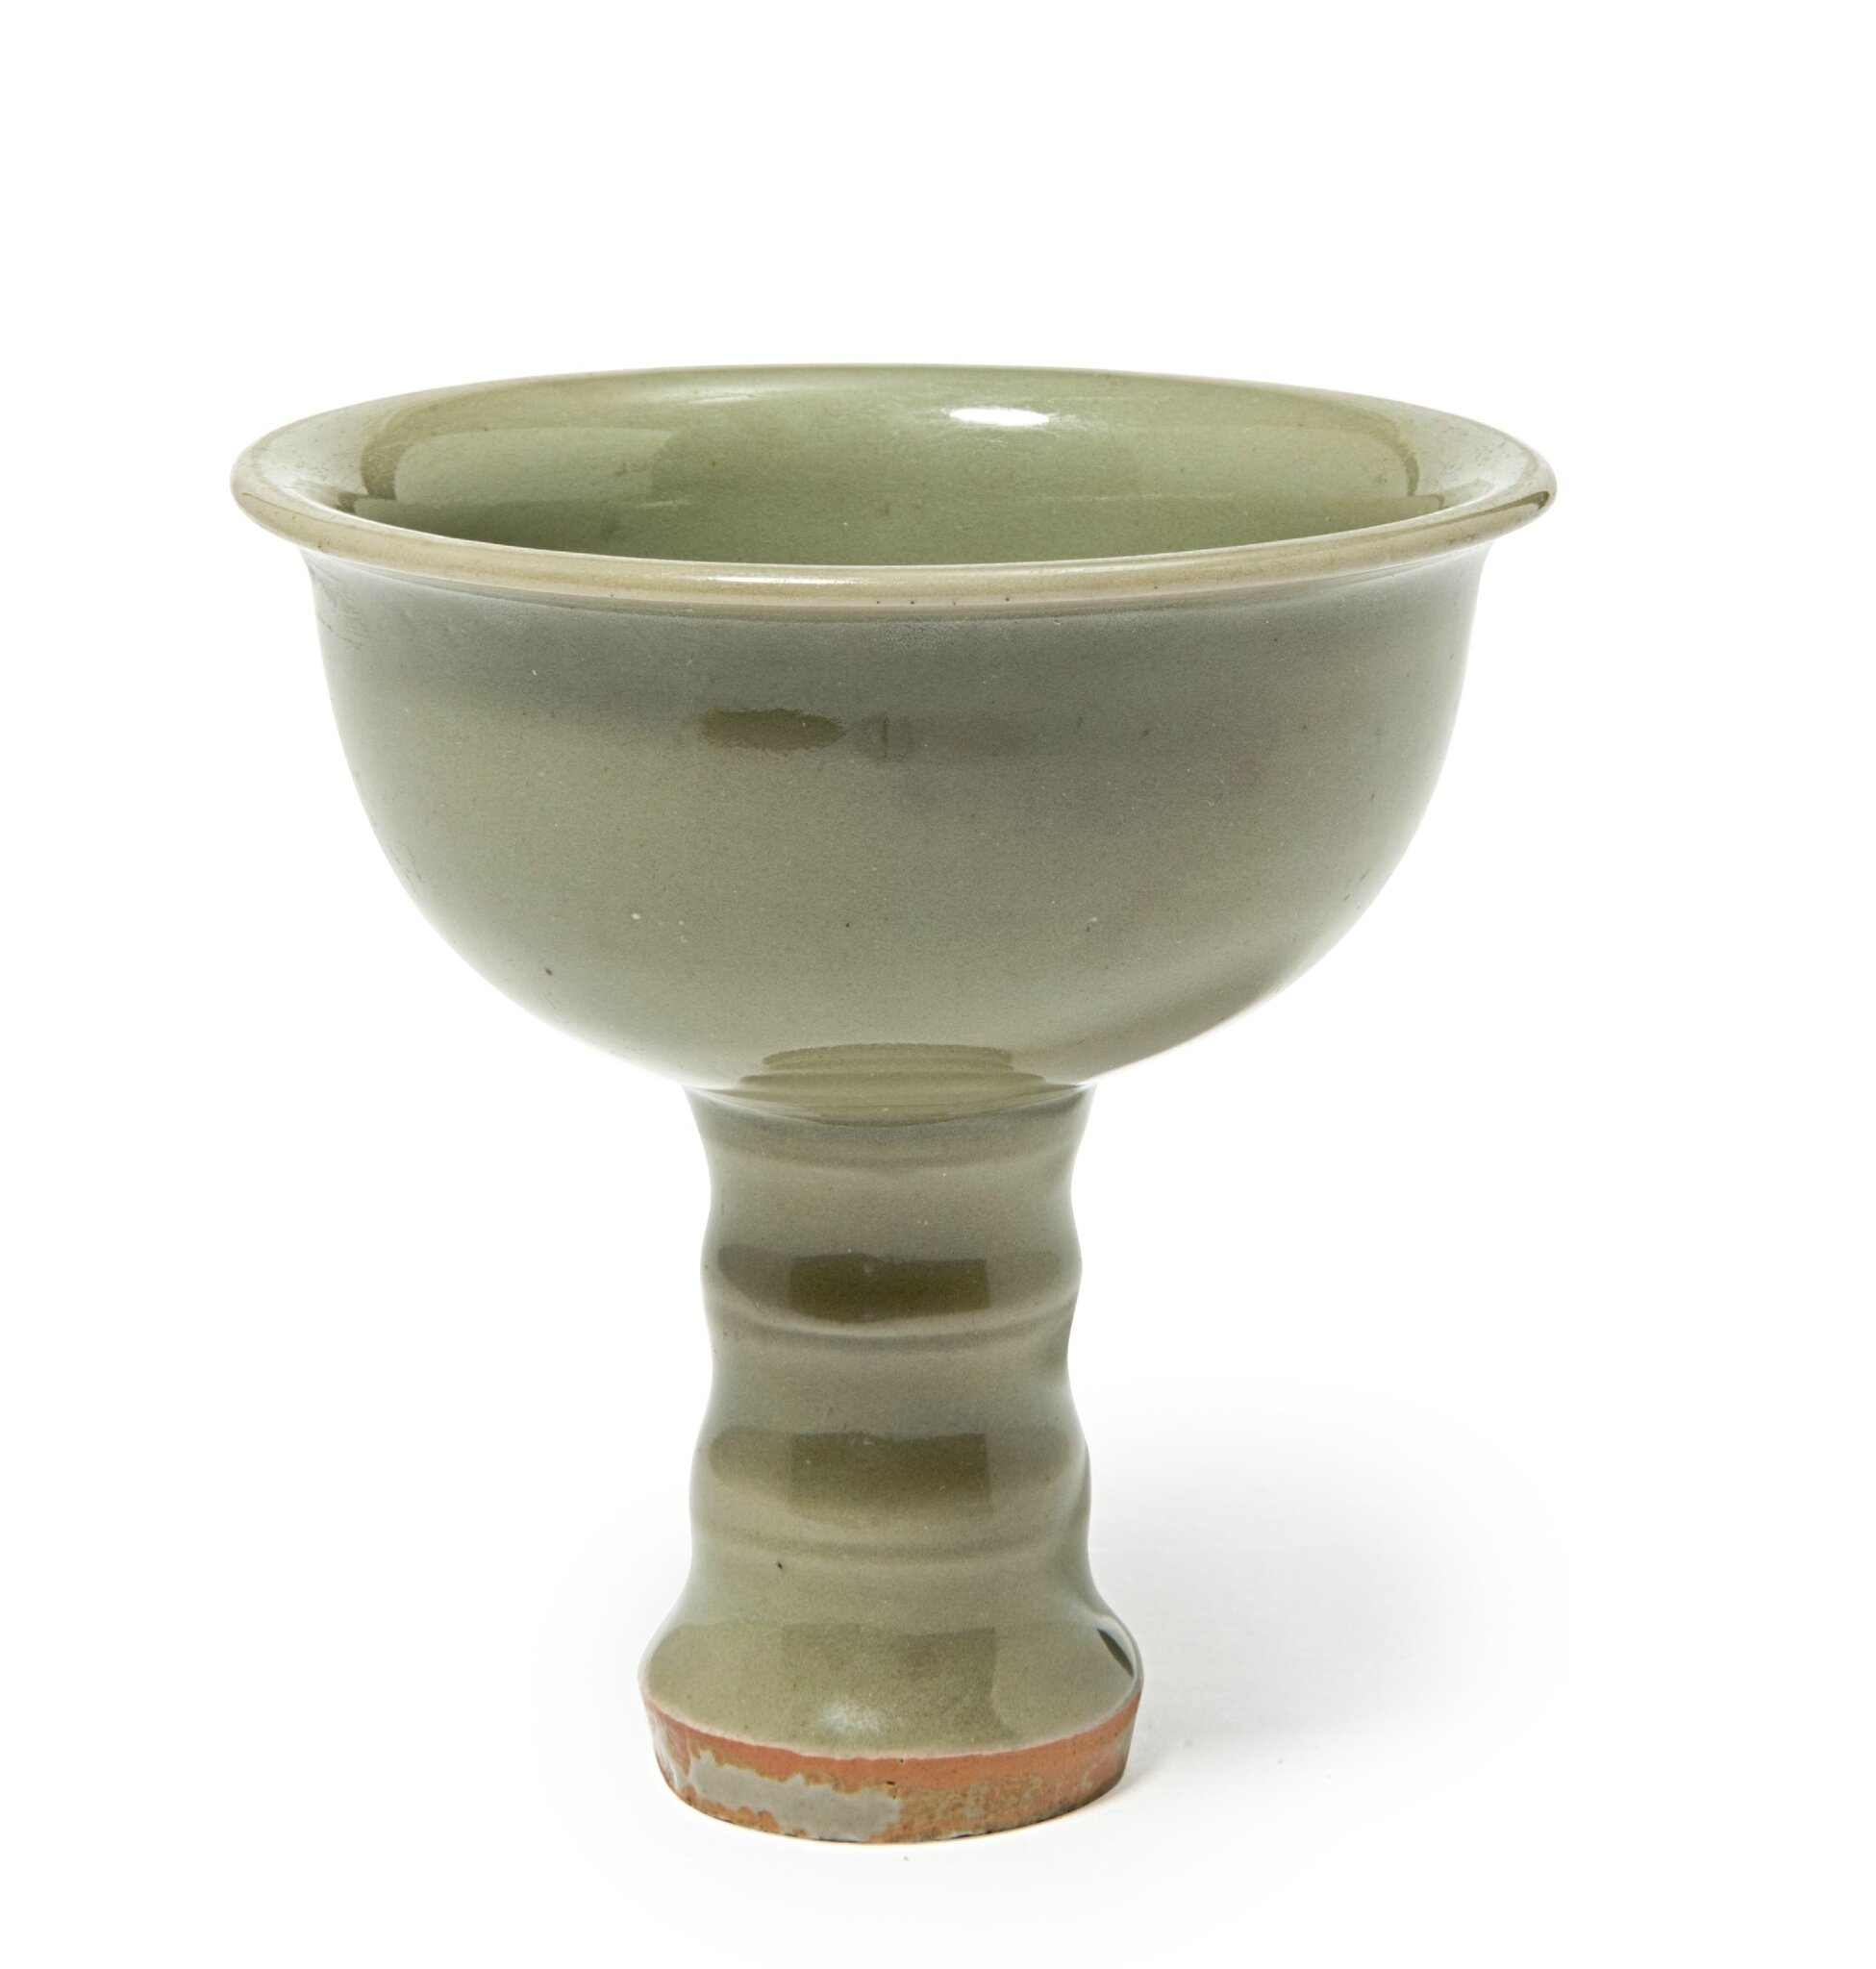 A celadon-glazed stem bowl, Yuan-Ming dynasty (1279-1644)